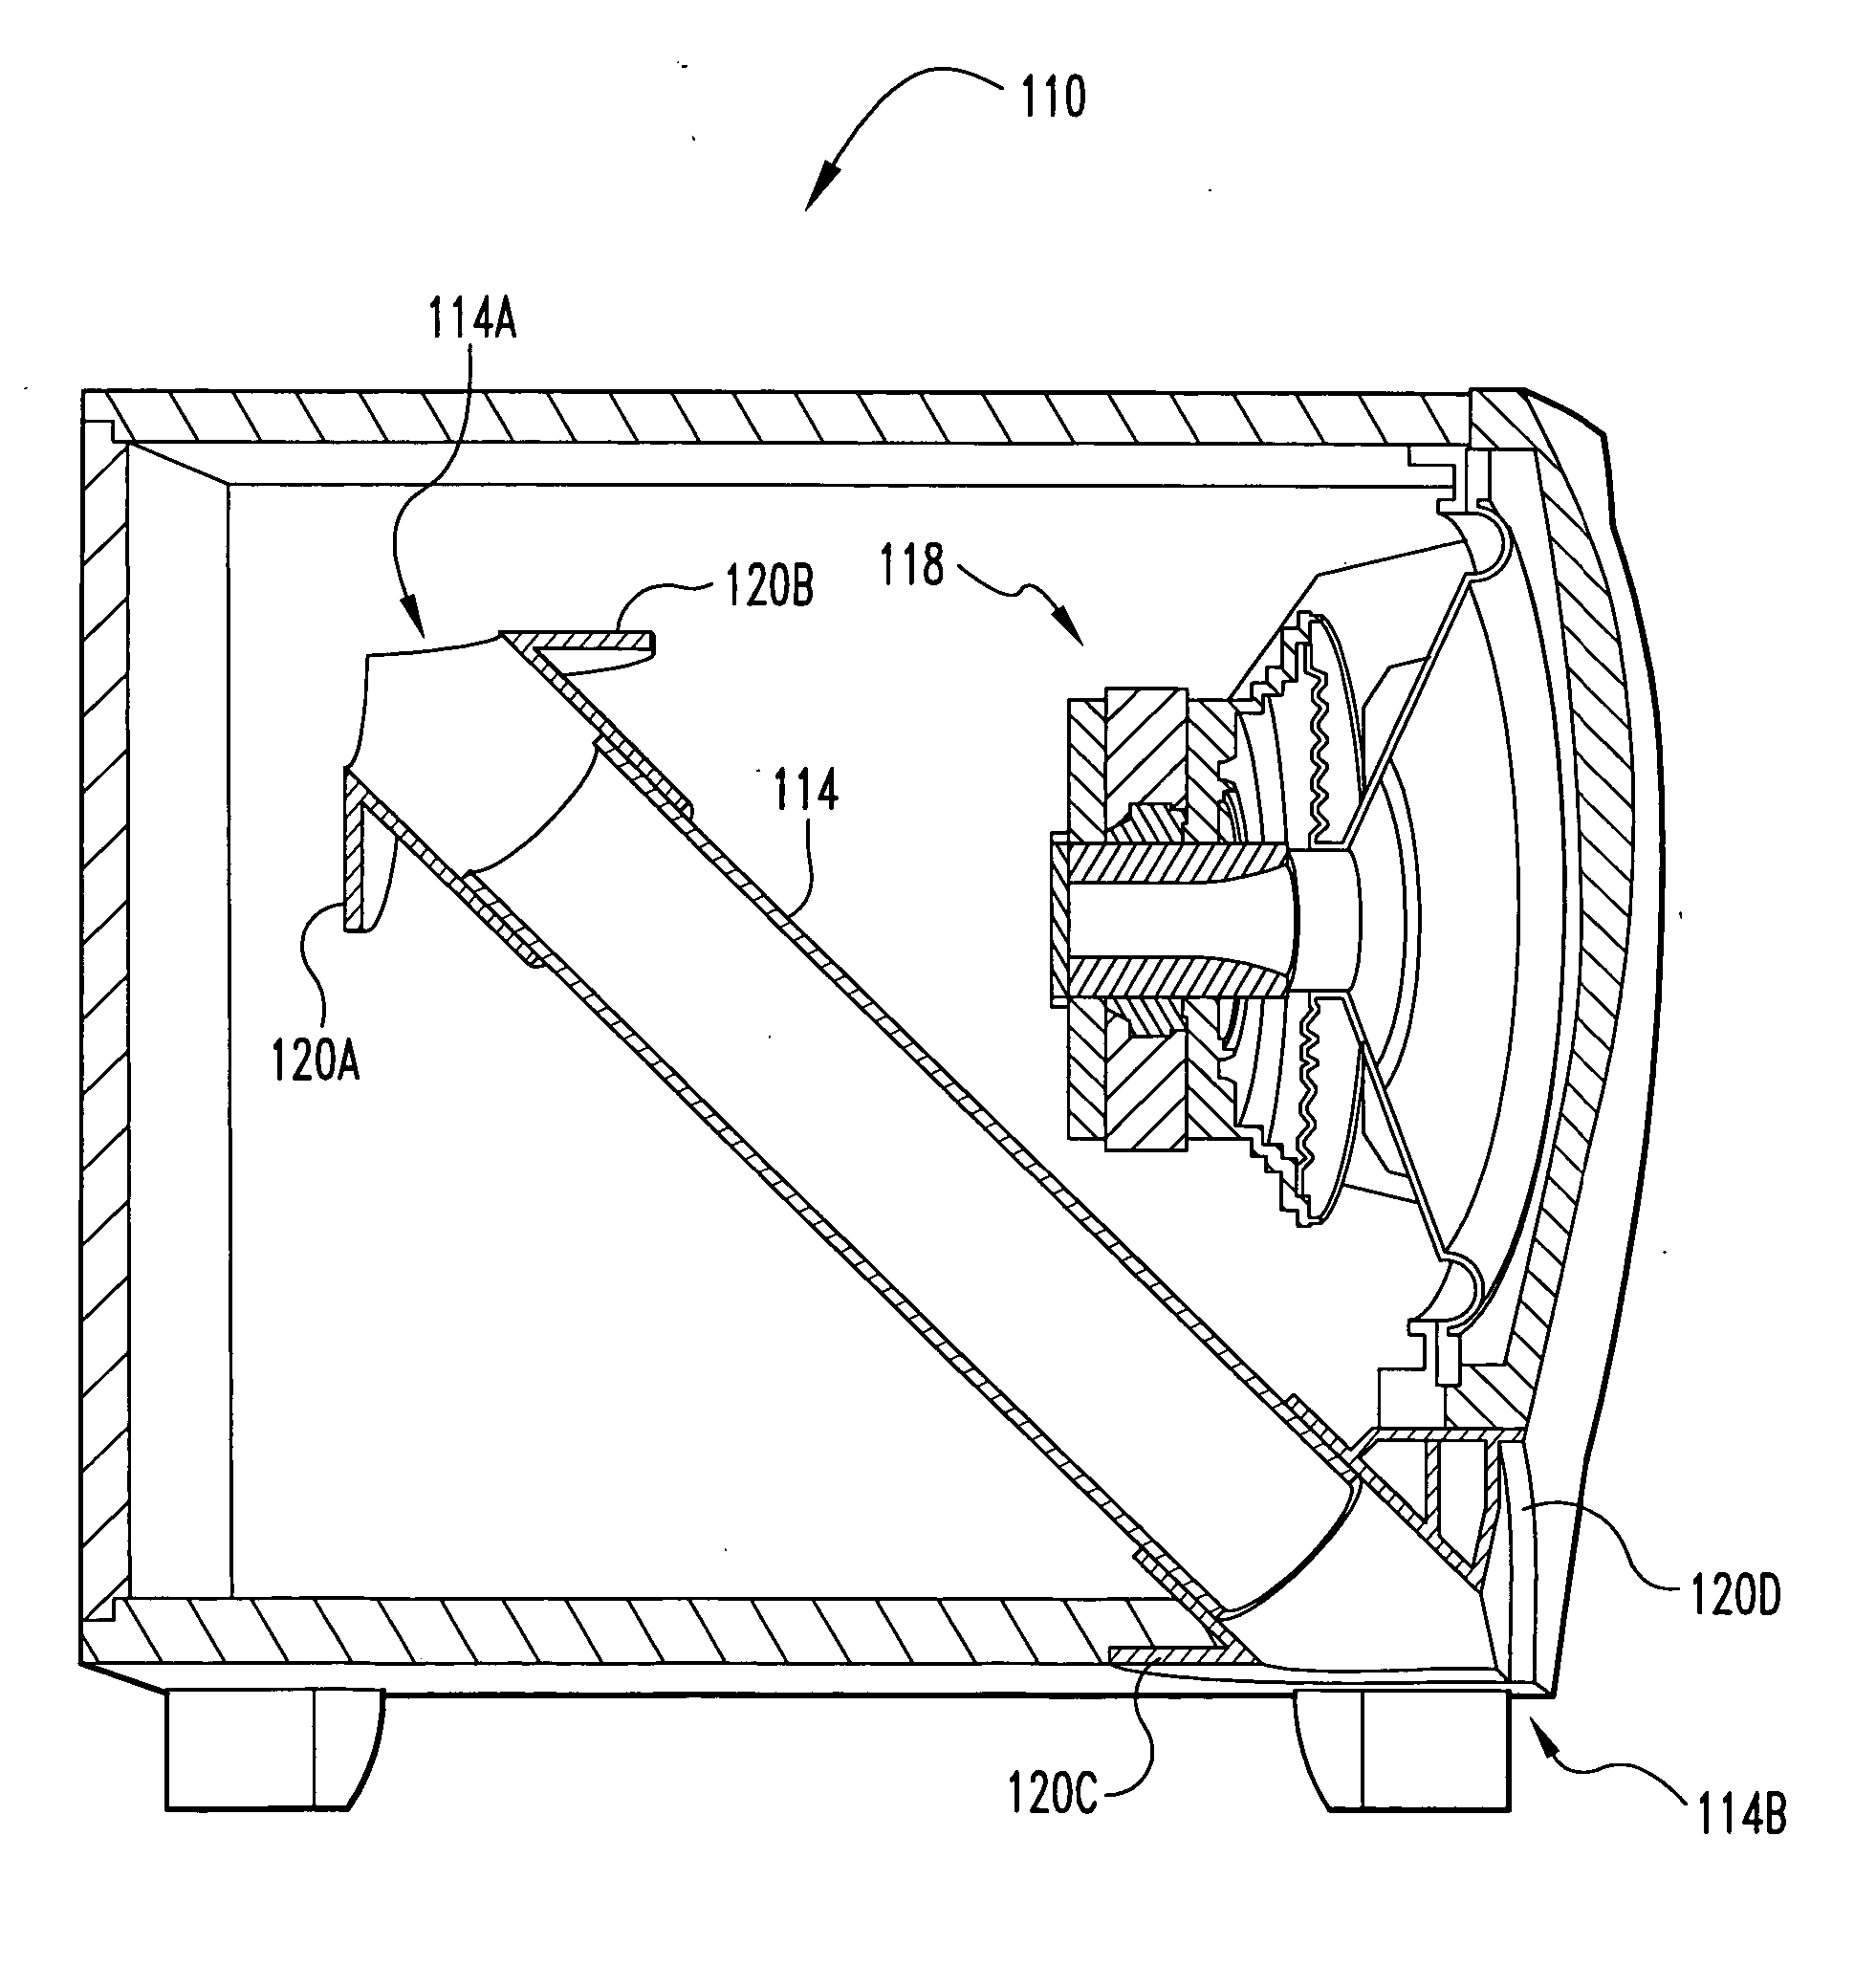 Loudspeaker assembly having a folded bifurcated vent tube